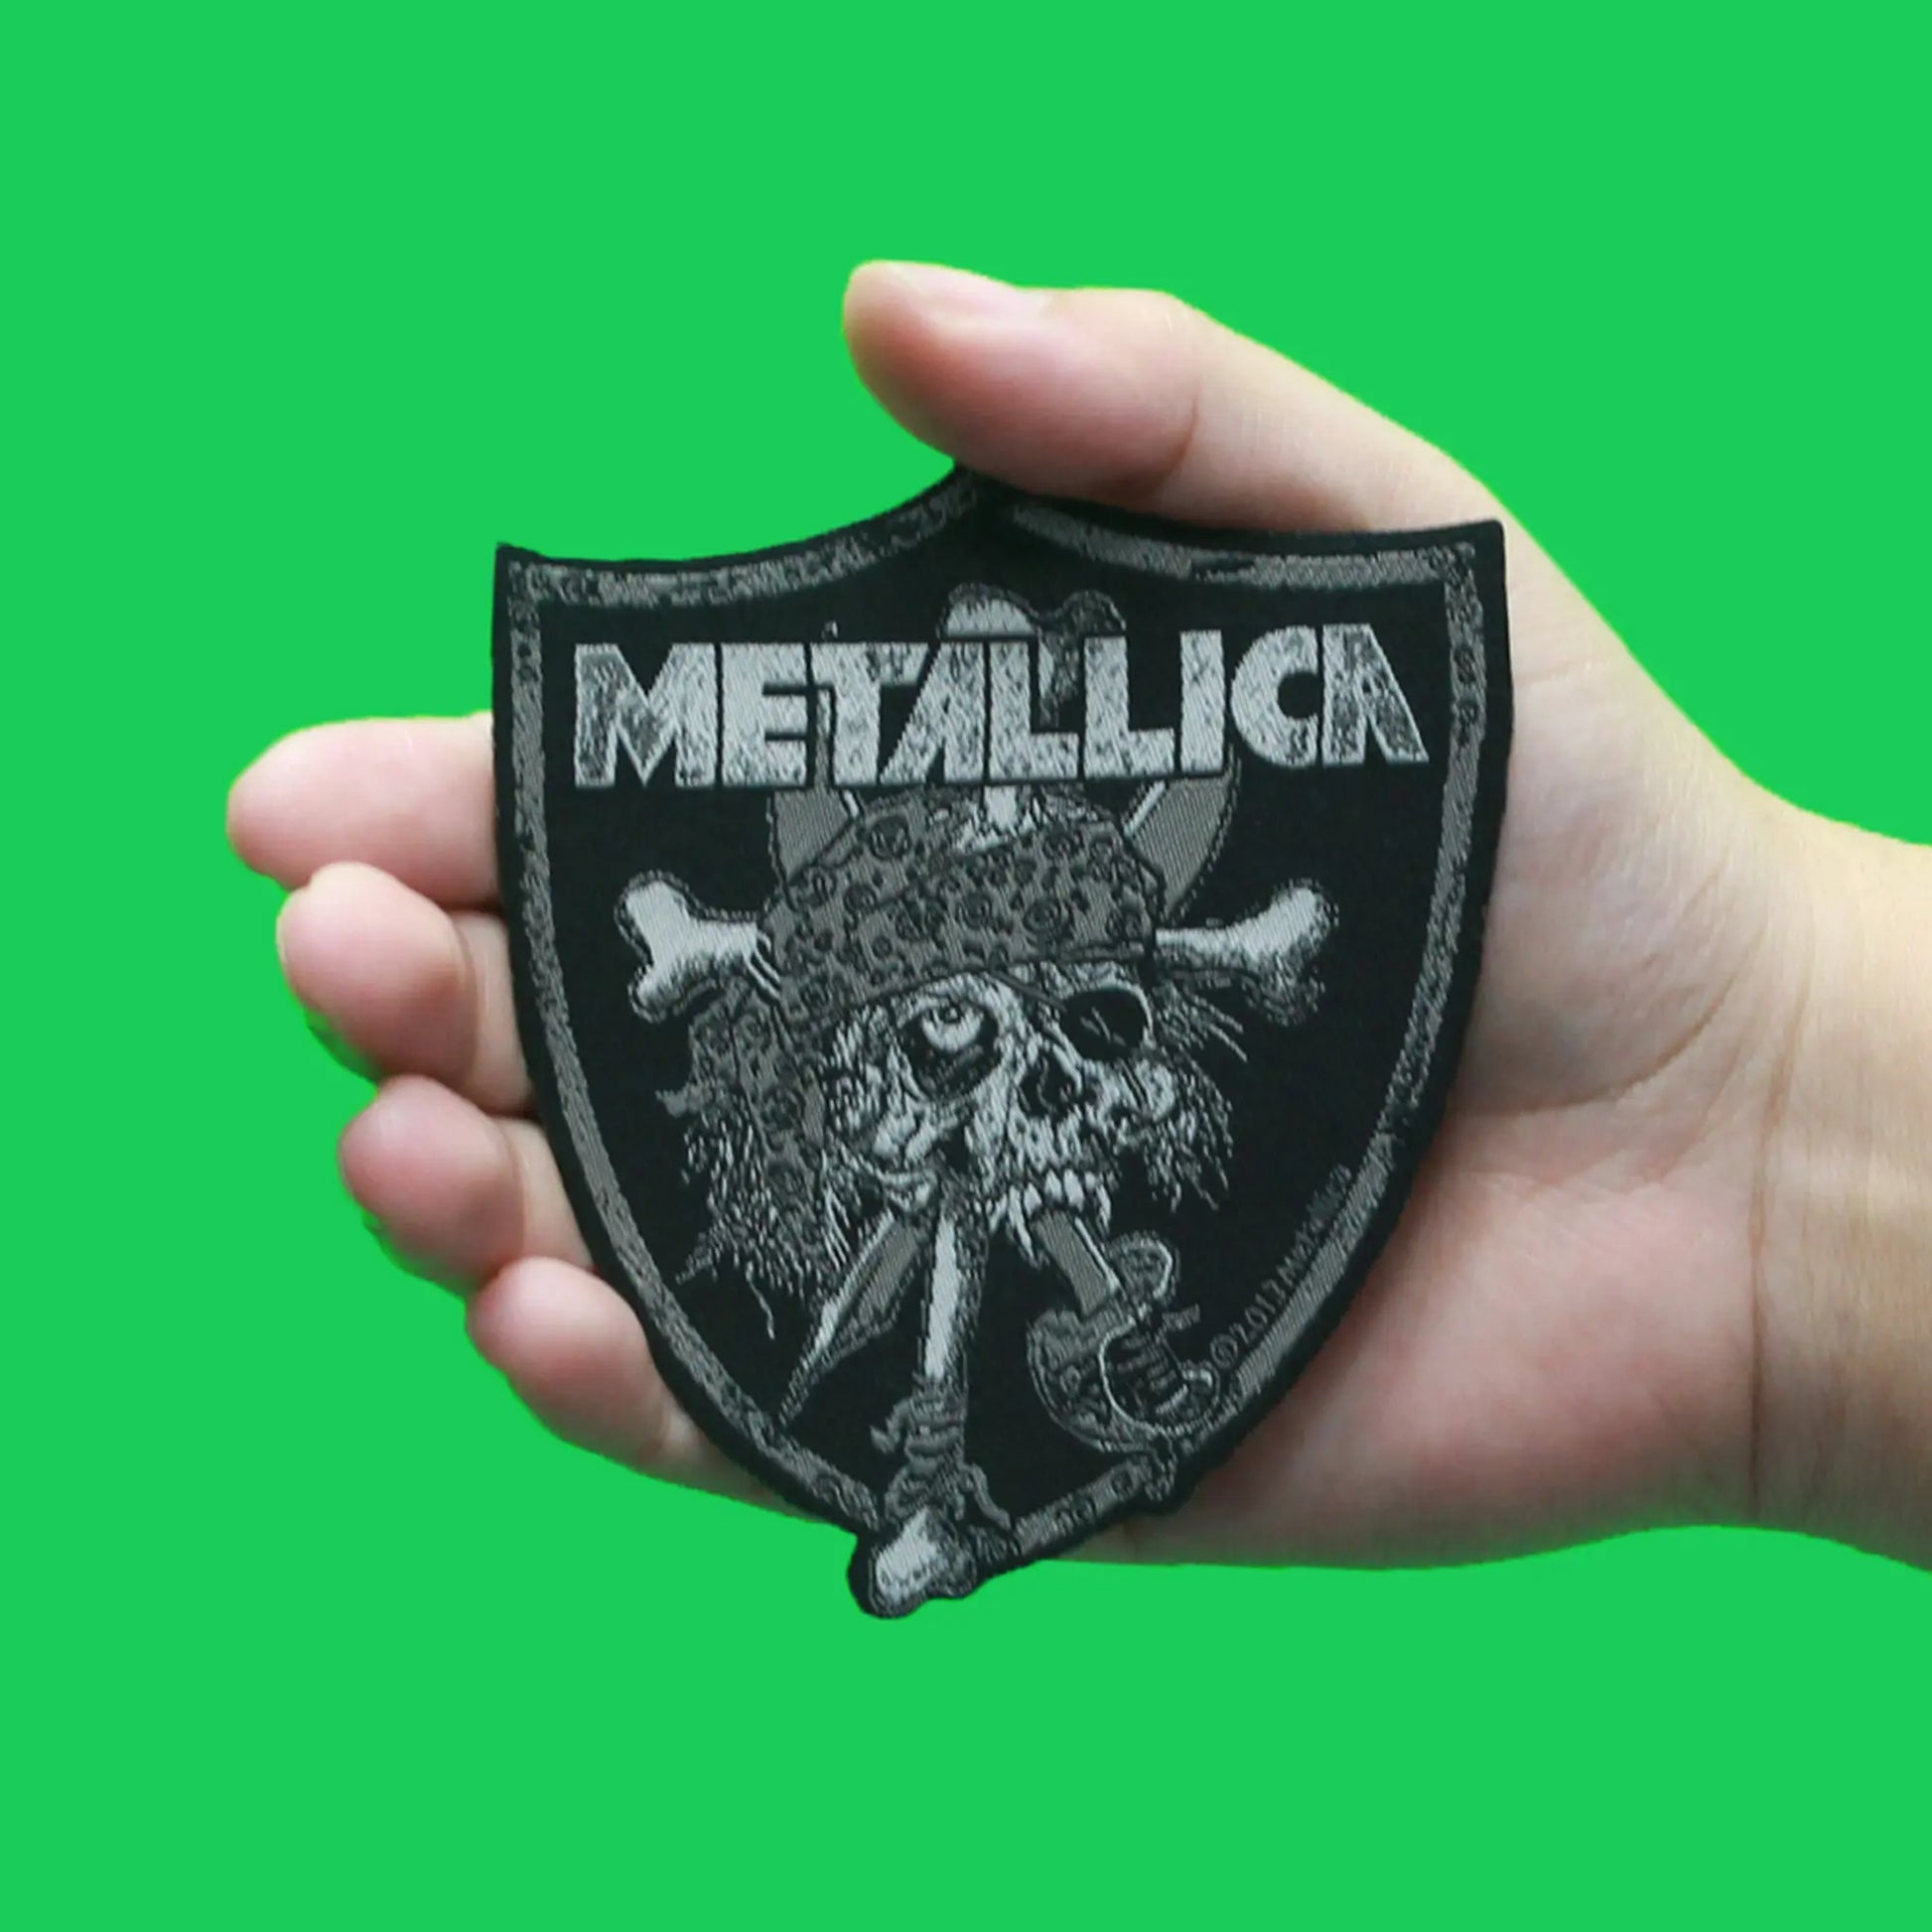 Metallica patch band iron on metal rock music DIY